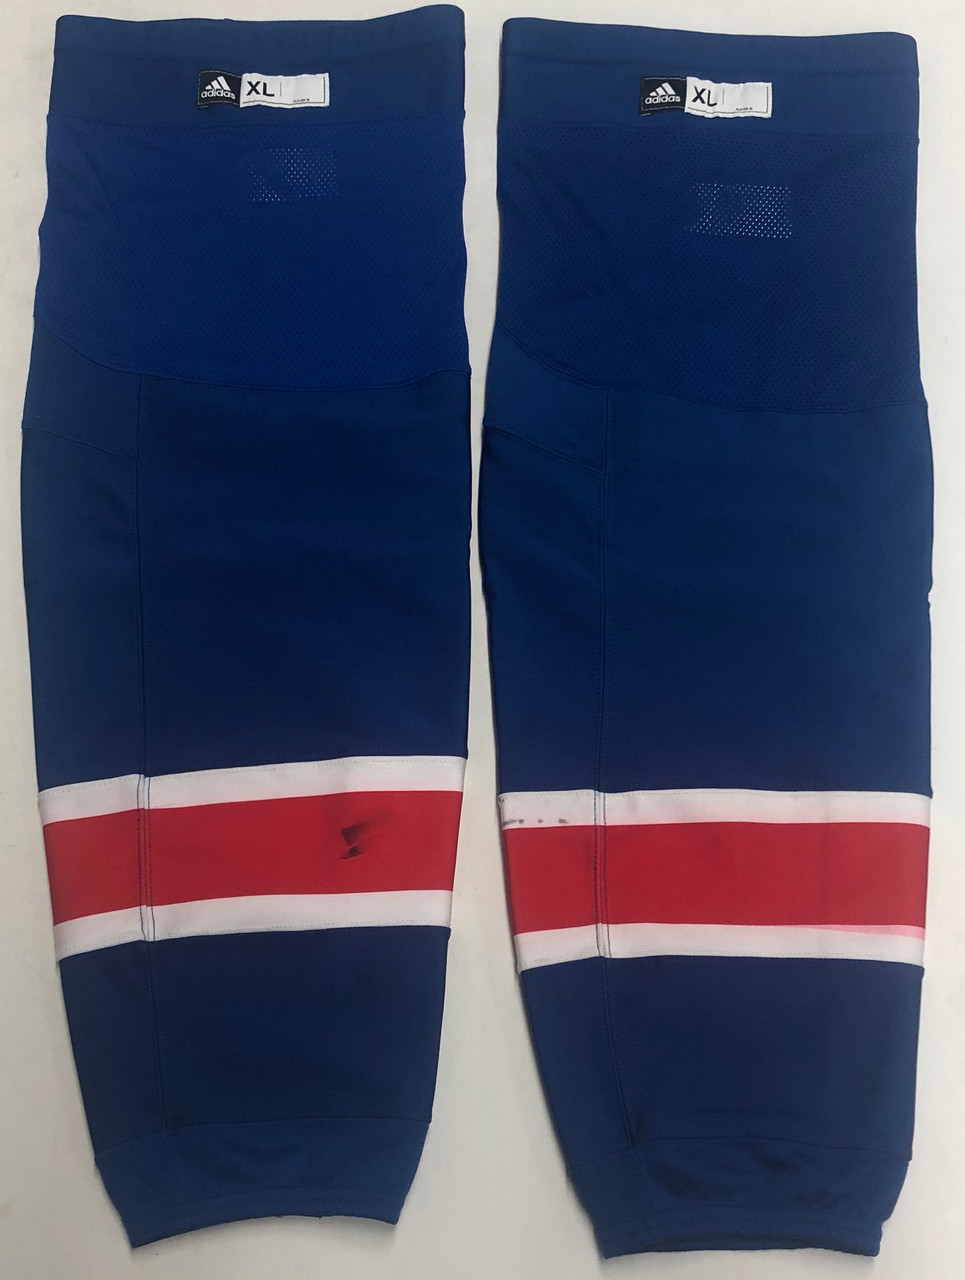 NEW Old Stock CCM Boys Ice Hockey Socks New York Rangers 2 Color Styles Avail 